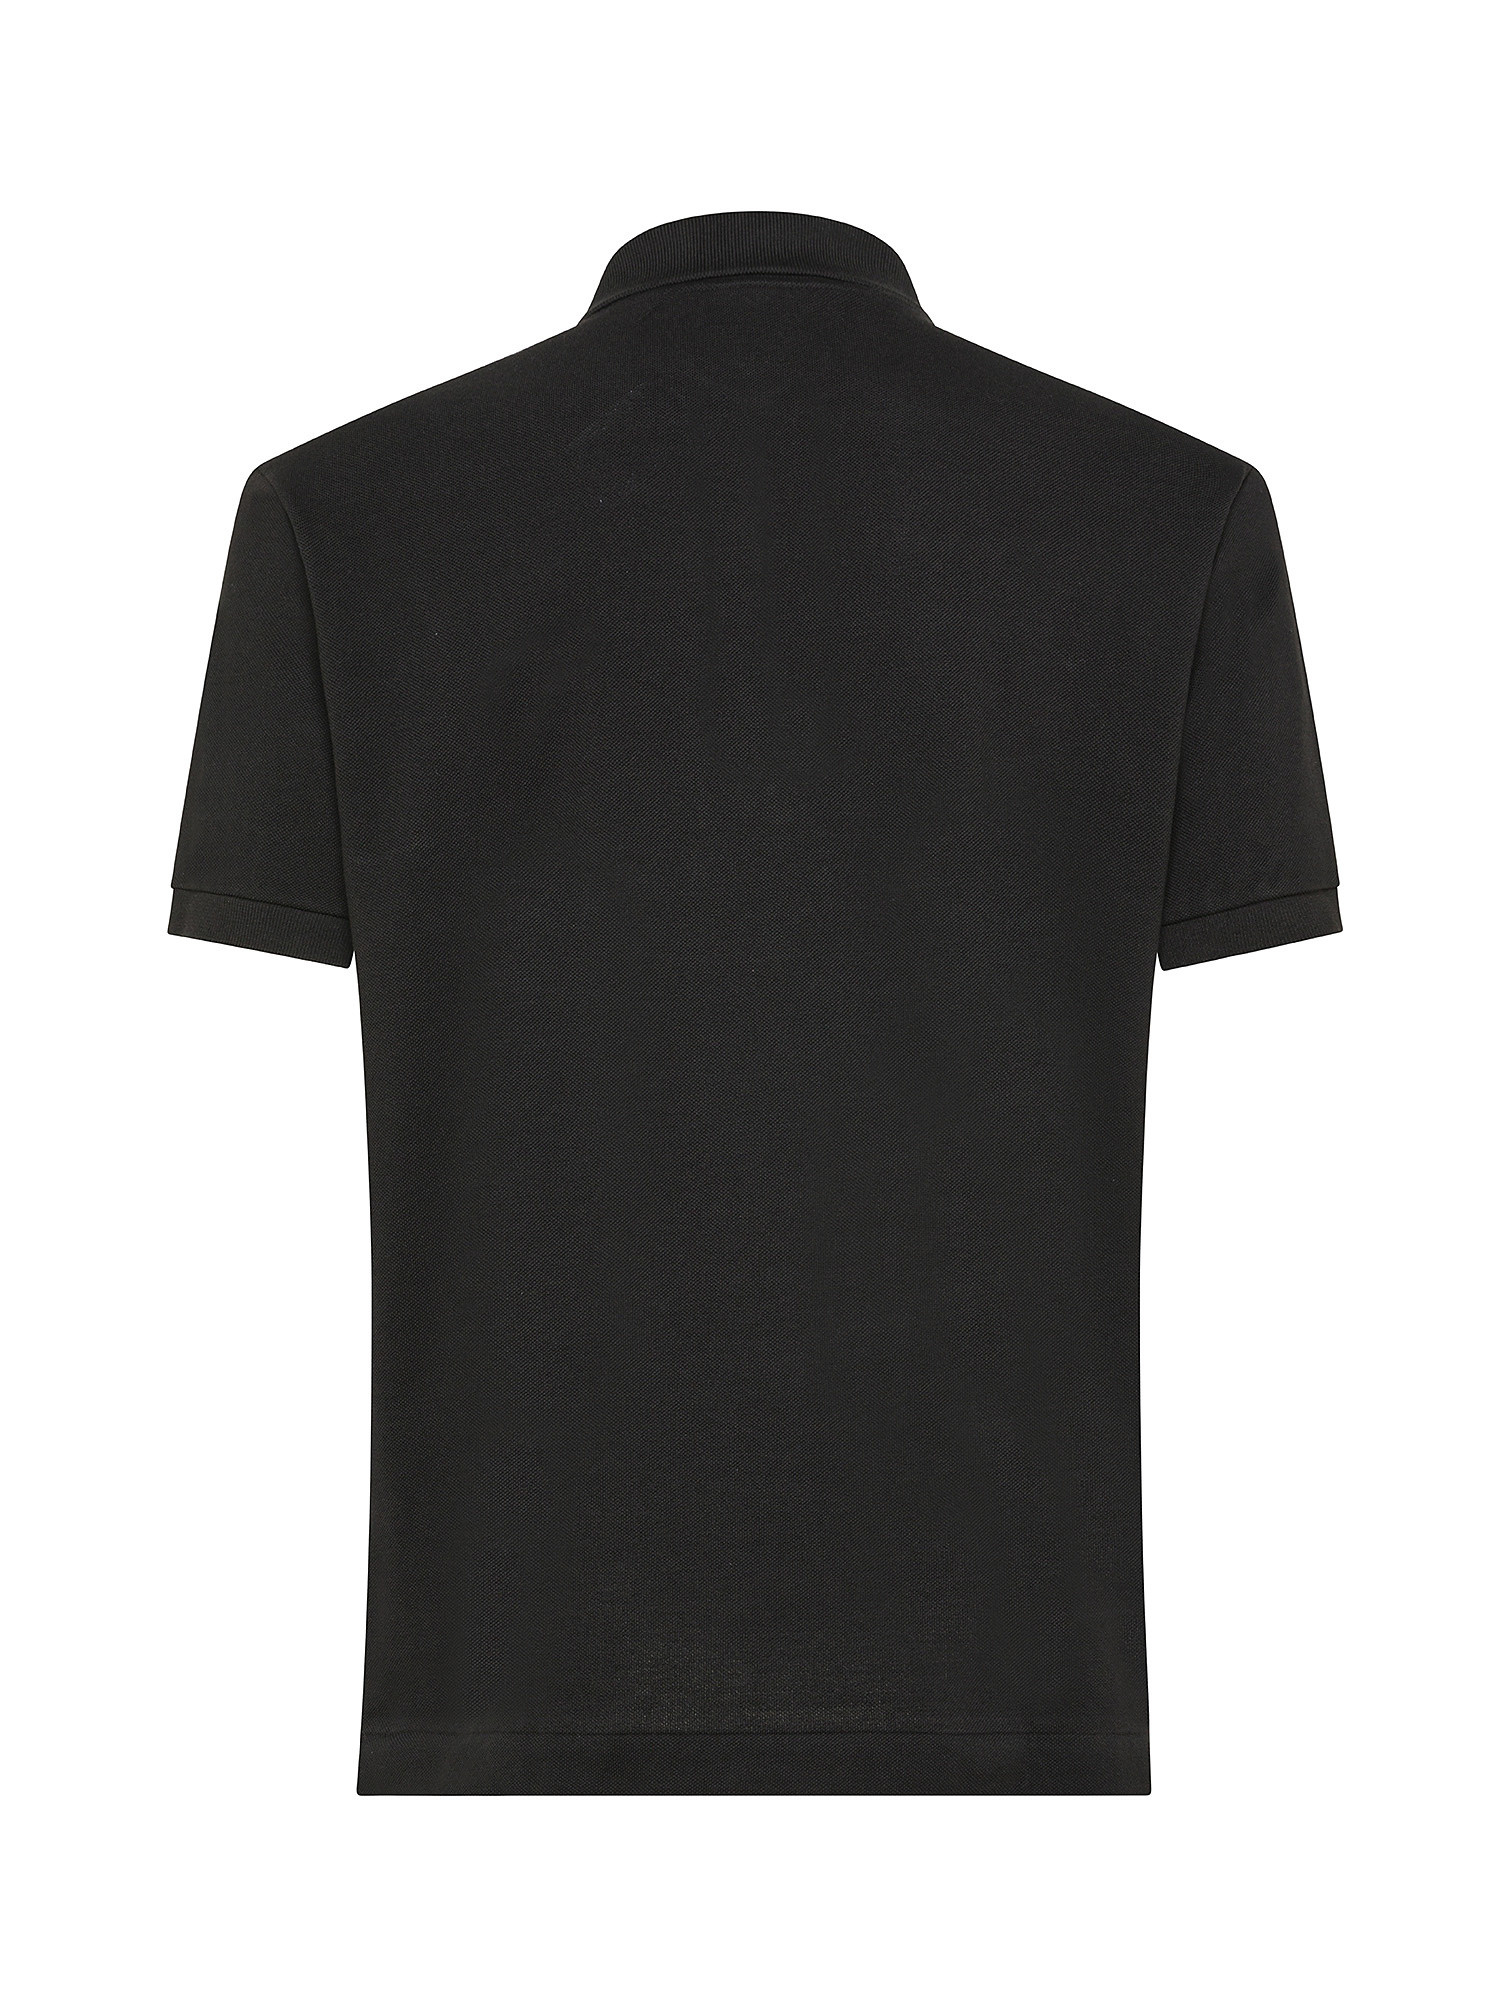 Lacoste - Classic cut polo shirt in petit piquè cotton, Black, large image number 1